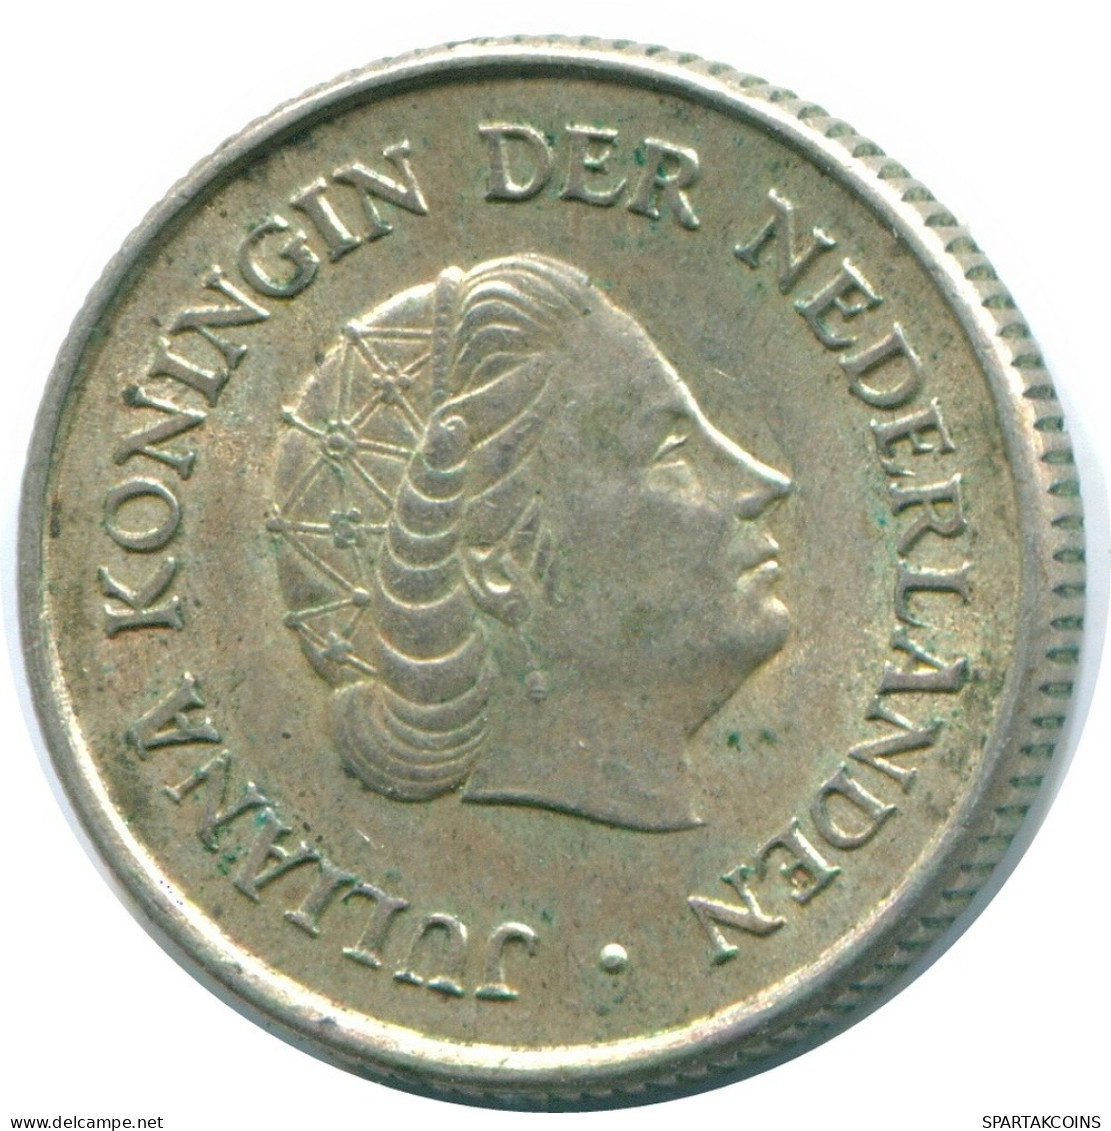 1/4 GULDEN 1963 NETHERLANDS ANTILLES SILVER Colonial Coin #NL11204.4.U.A - Netherlands Antilles